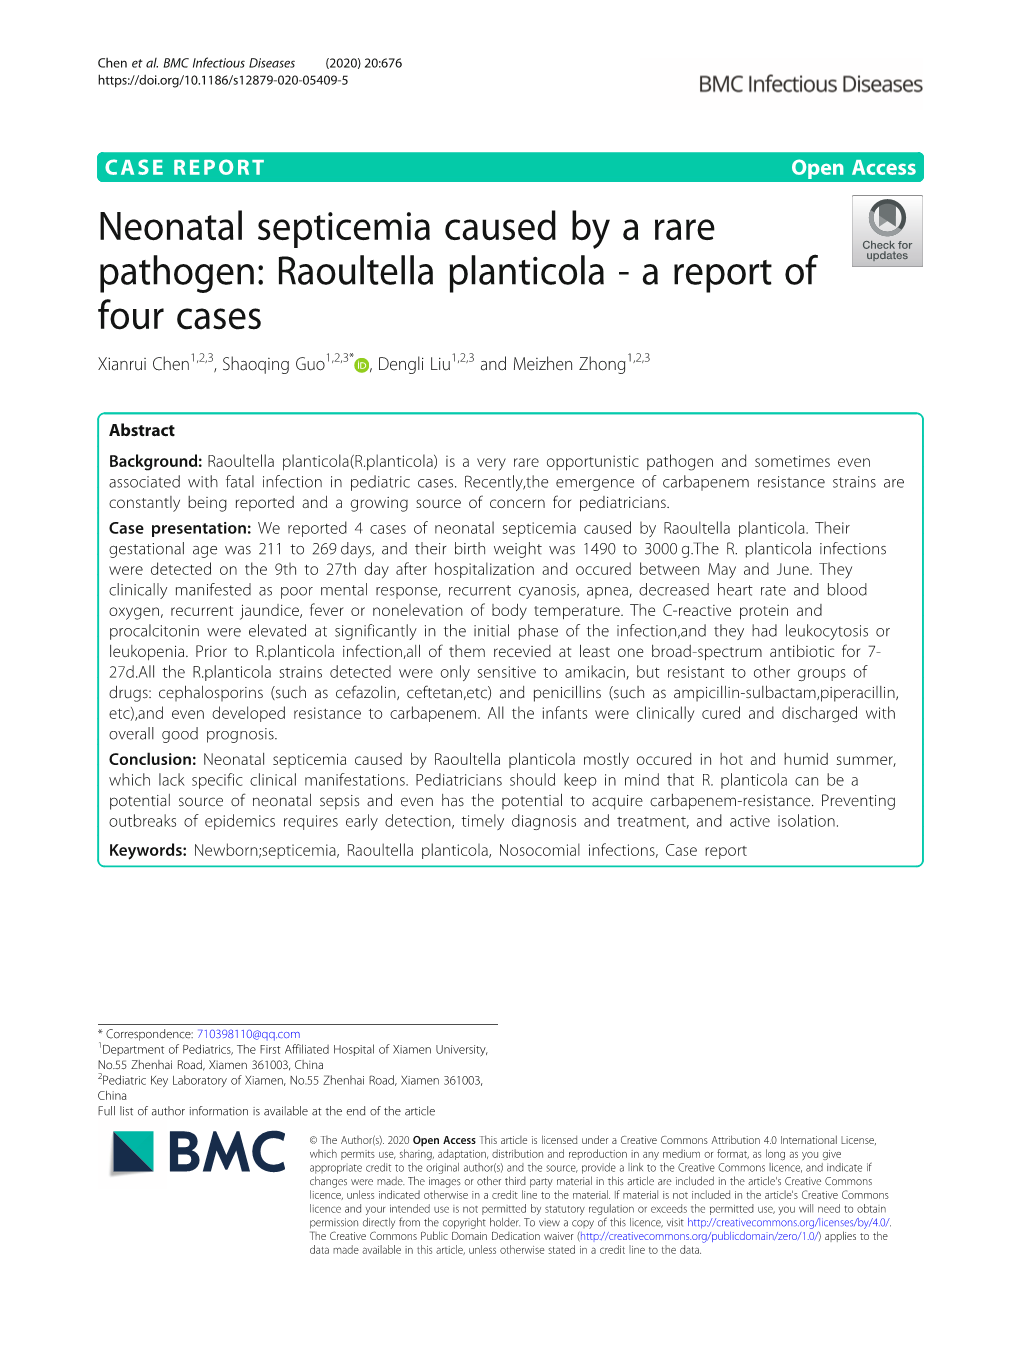 Neonatal Septicemia Caused by a Rare Pathogen: Raoultella Planticola